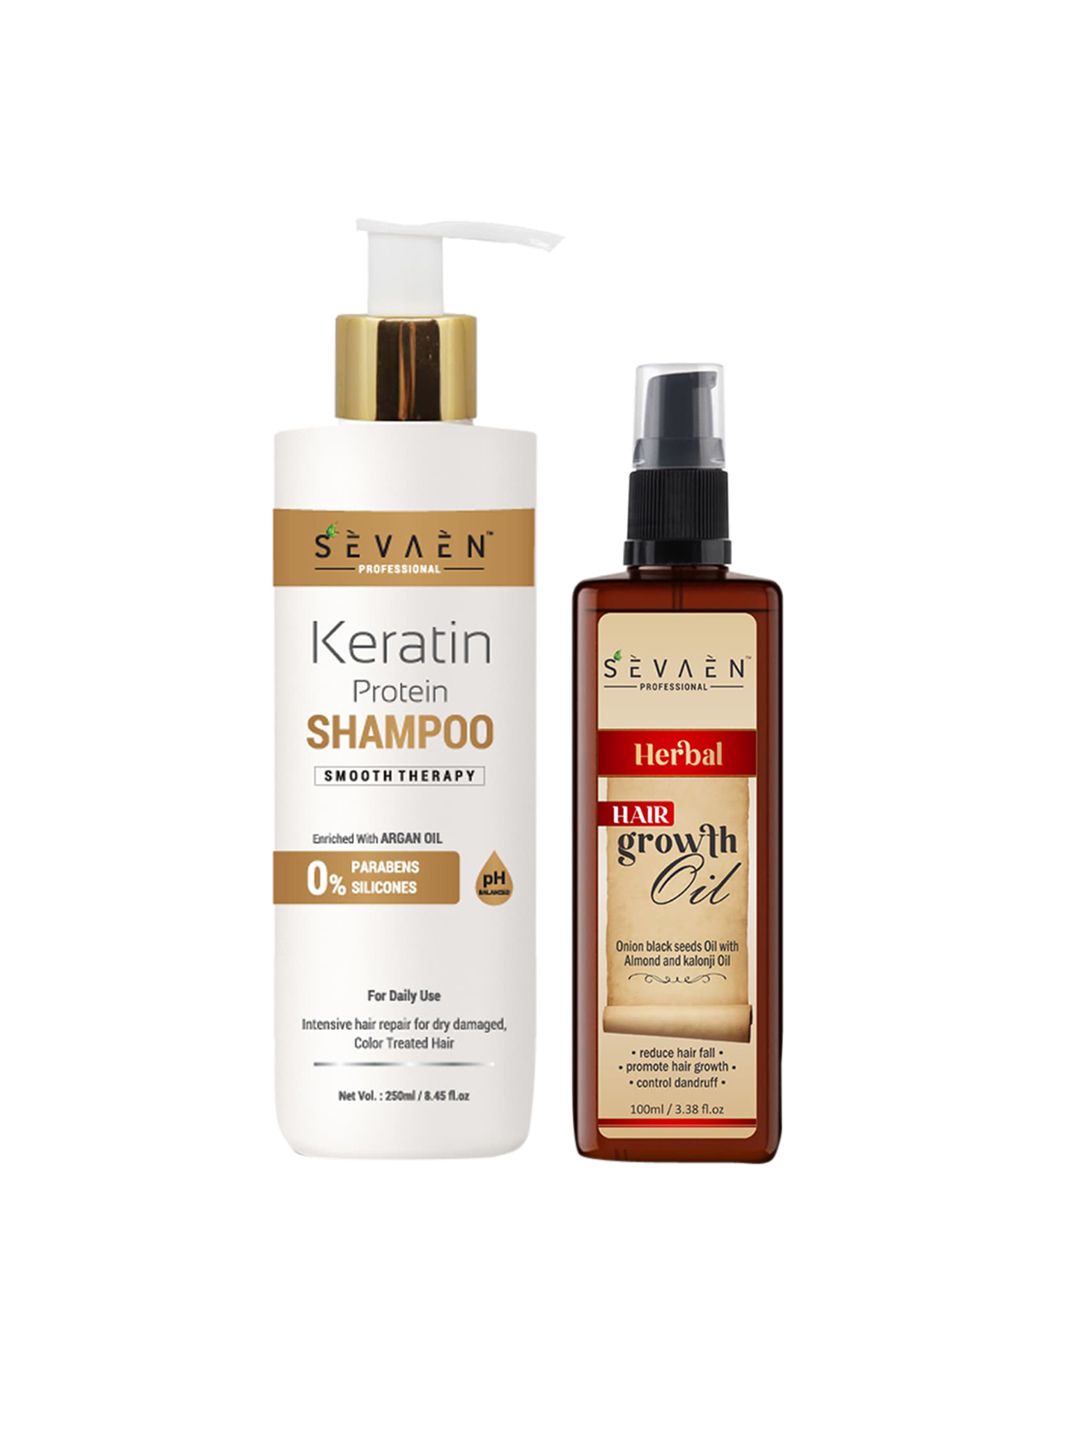 SEVAEN Set of Keratin Protein Smooth Therapy Shampoo 250 ml & Ayurvedic Hair Oil 100 ml Price in India